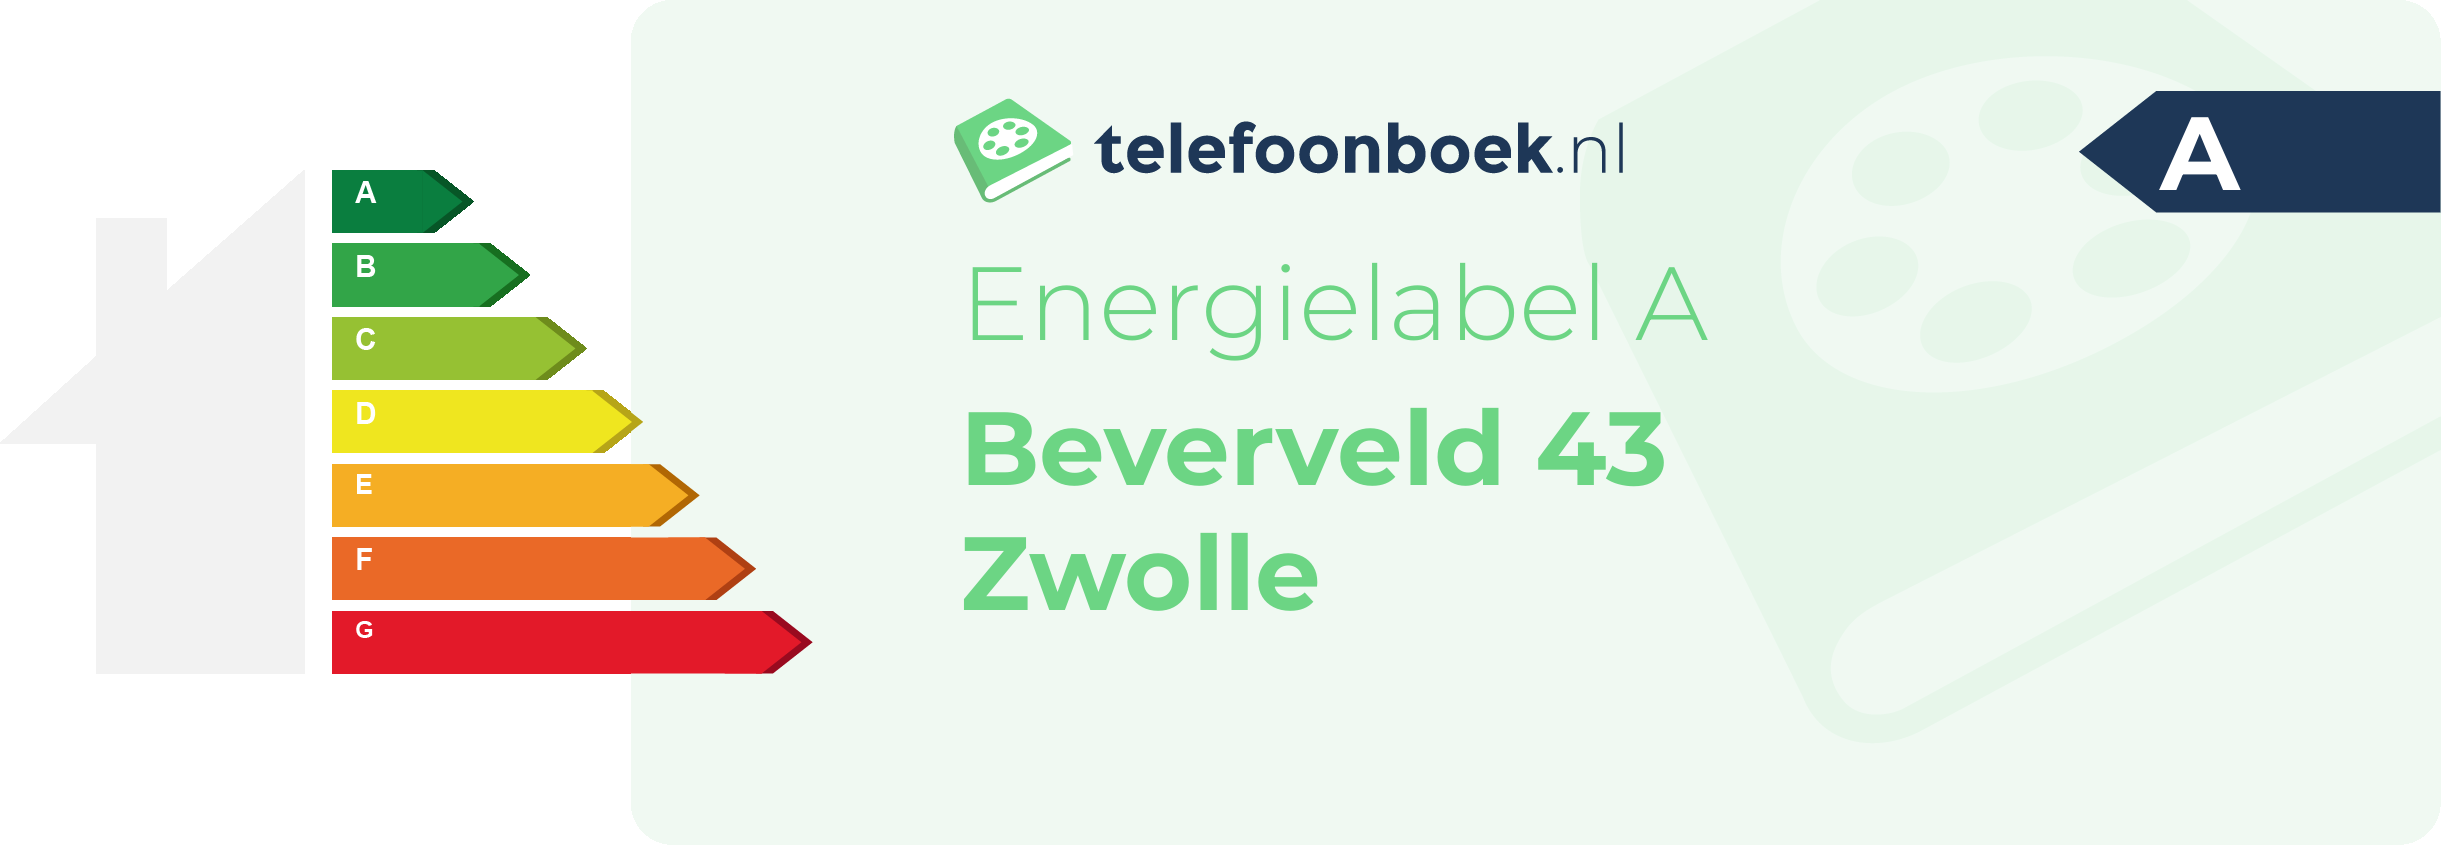 Energielabel Beverveld 43 Zwolle